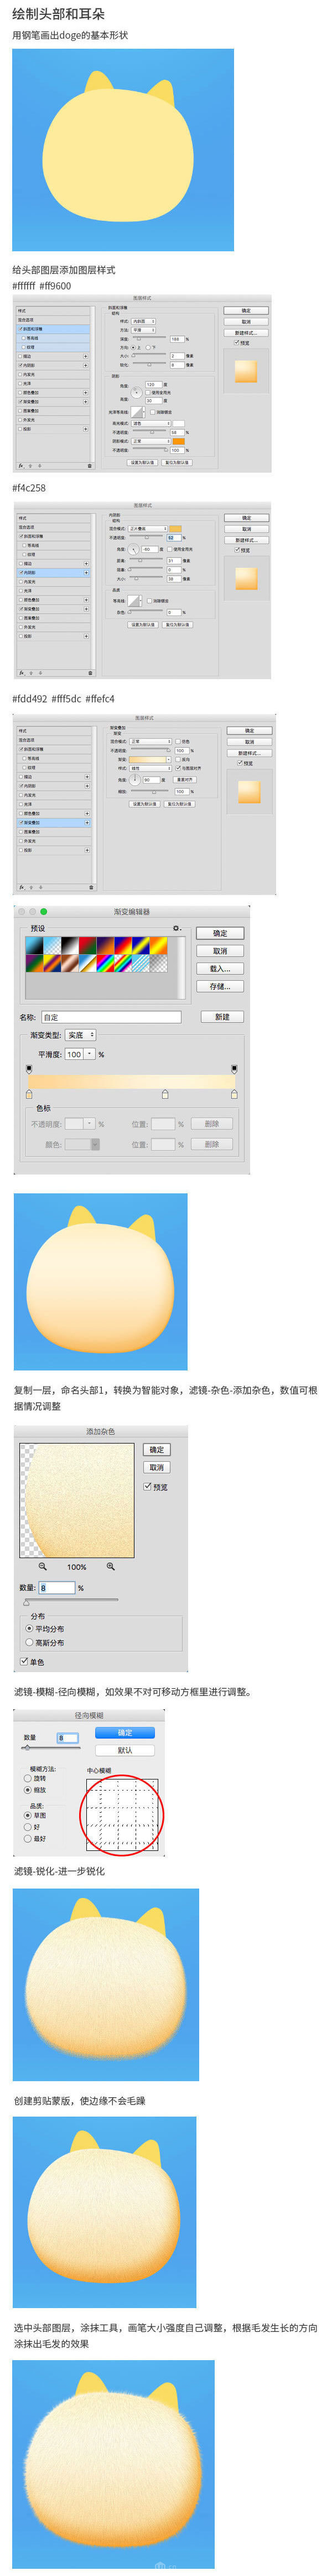 Photoshop绘制可爱的卡通小狗头像教程,PS教程,素材中国网